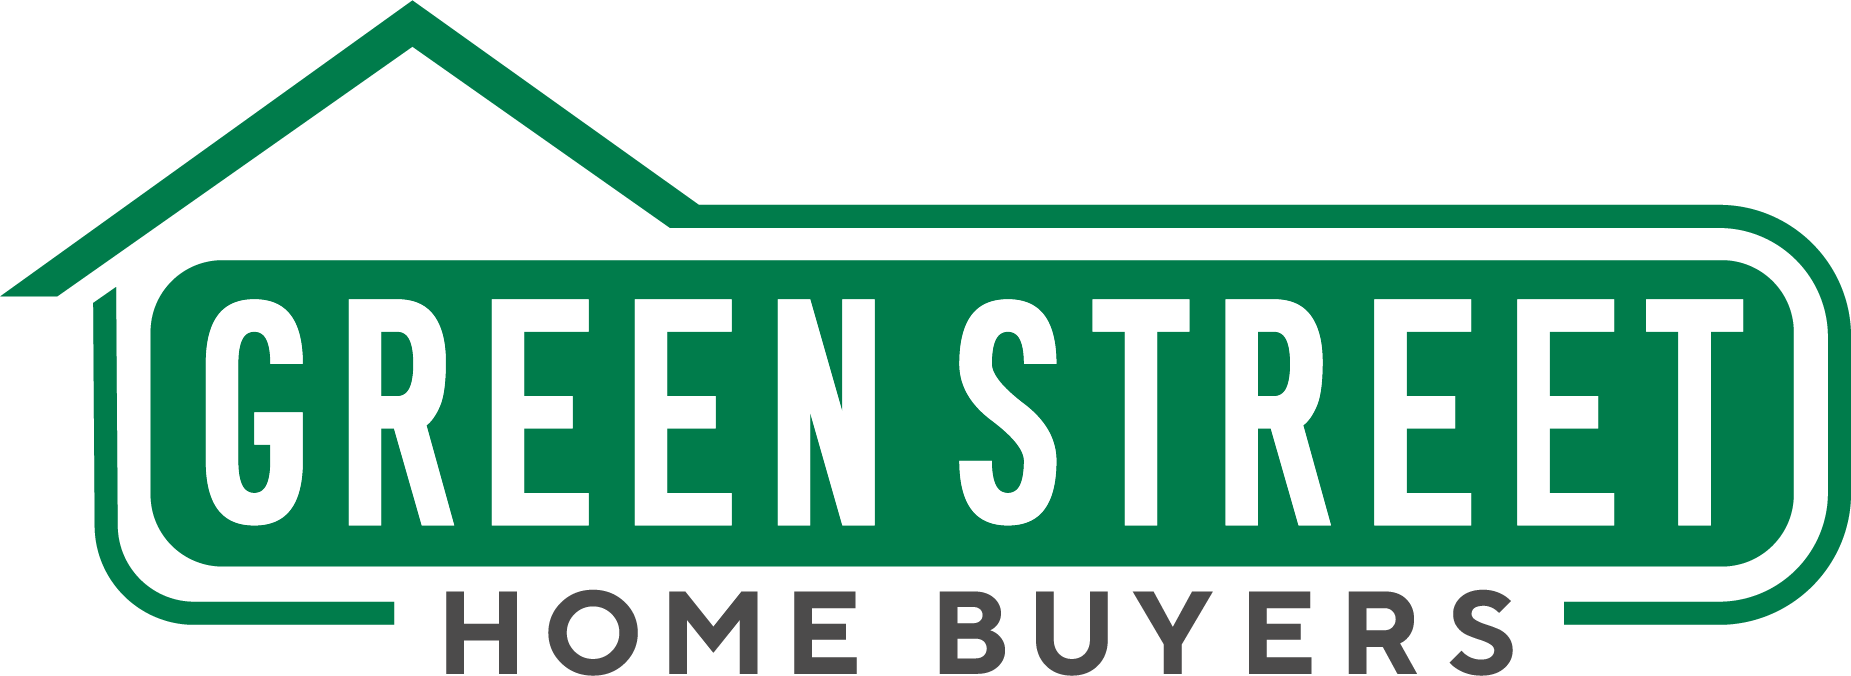 Green Street Home Buyers logo